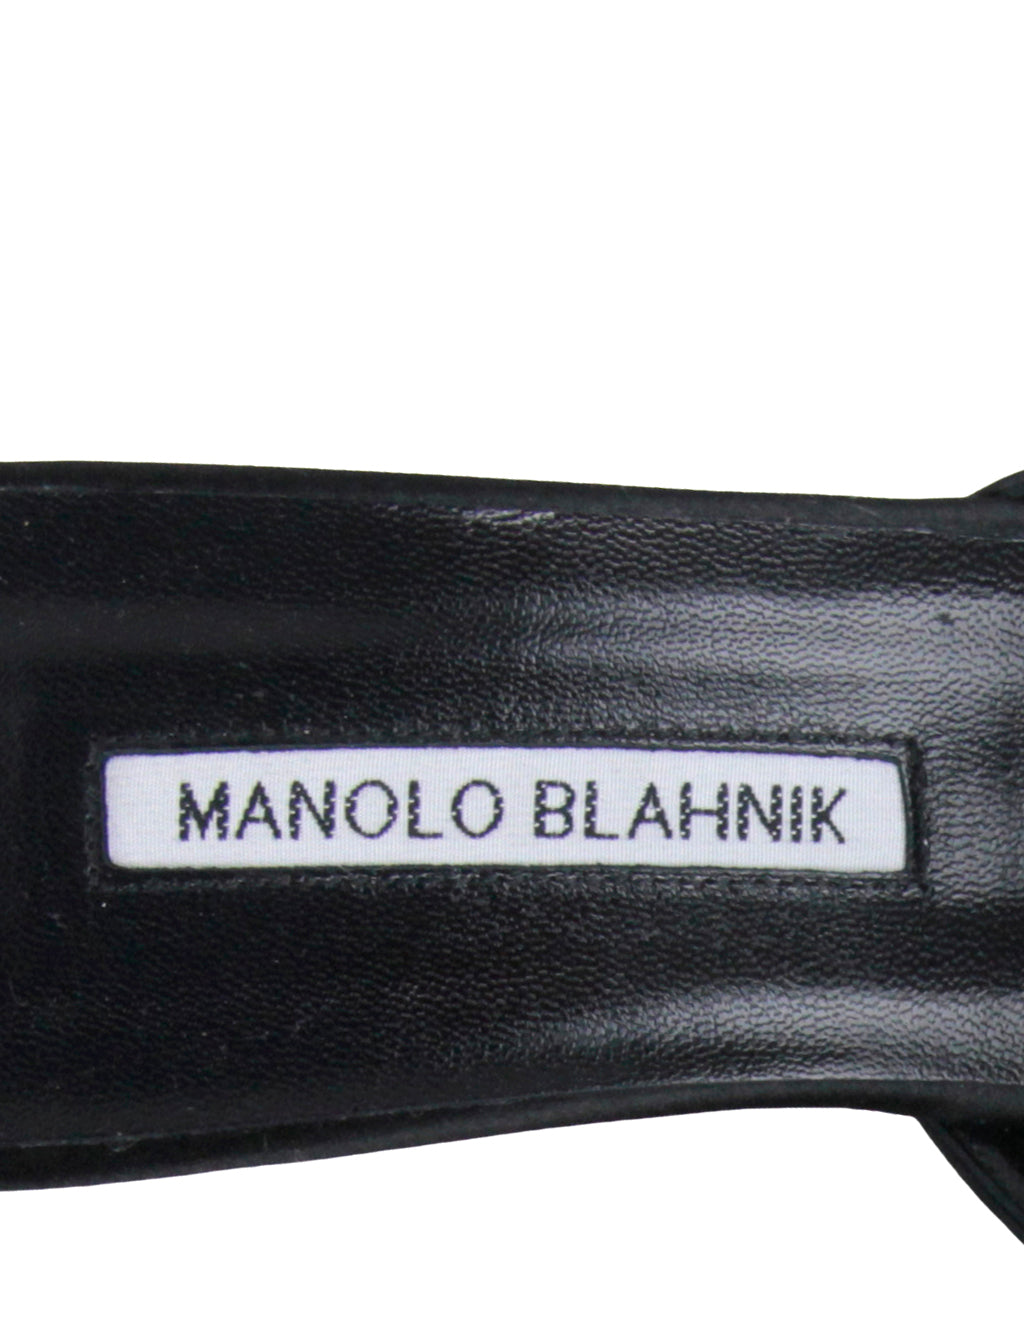 Manolo Blahnik Black Satin Hangisimu Satin Mule sz 39.5